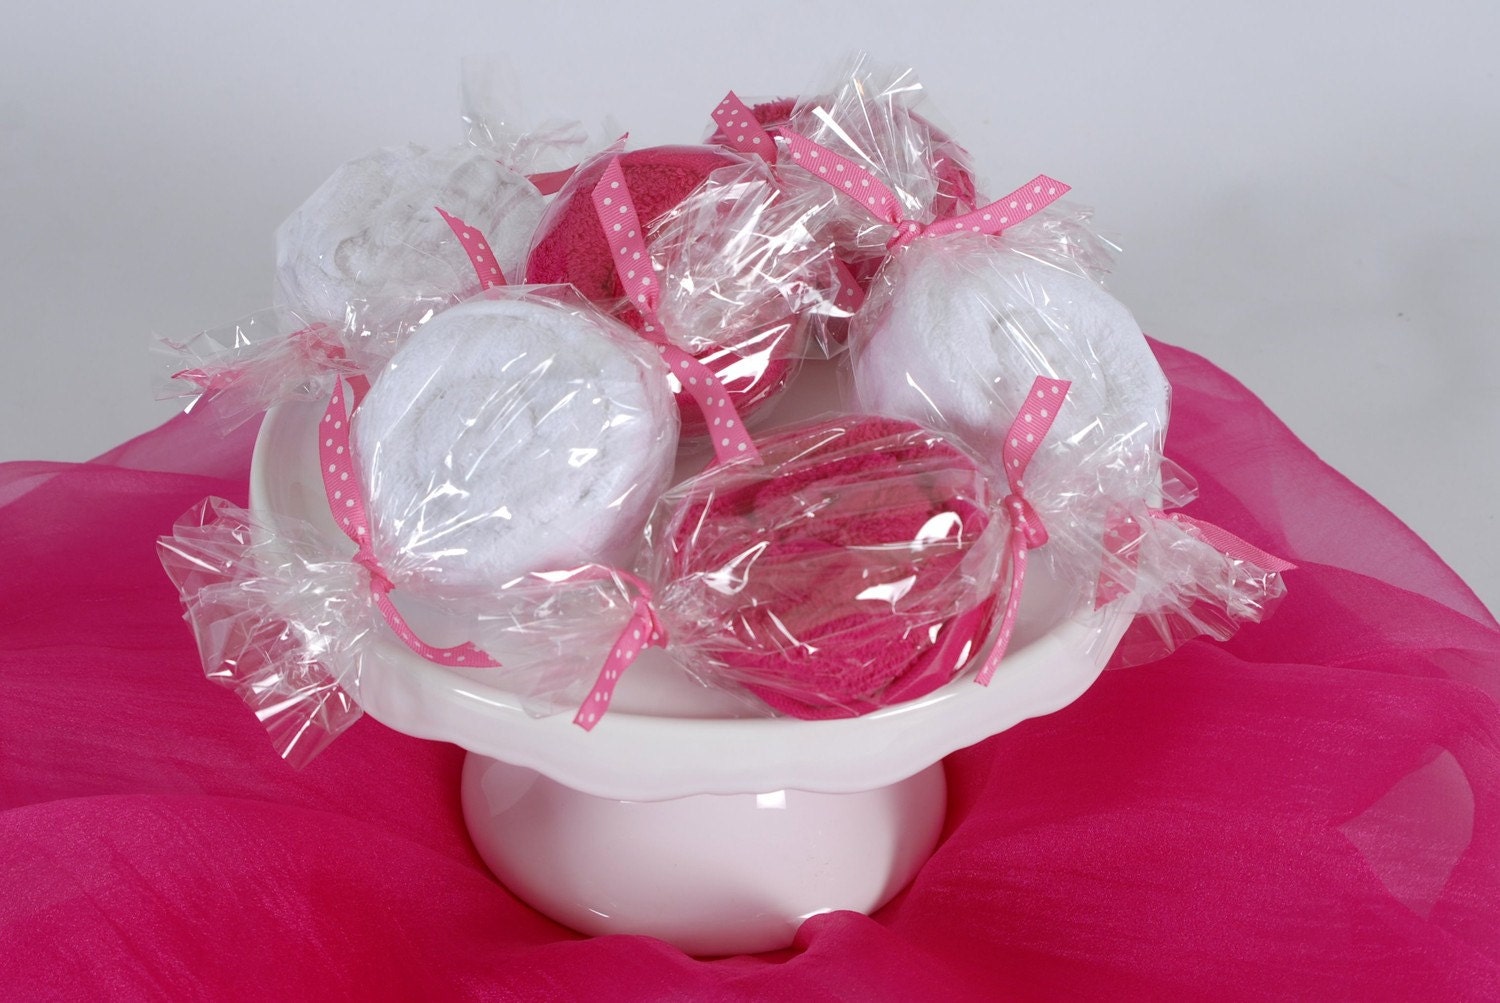 Adult Washcloth Candy Favor Cupcake Onesie Gift Set The Riley   baby shower   ایده برای تزیین سیسمونی  نوزاد و فرشته كوچولو جشن سیسمونی یا